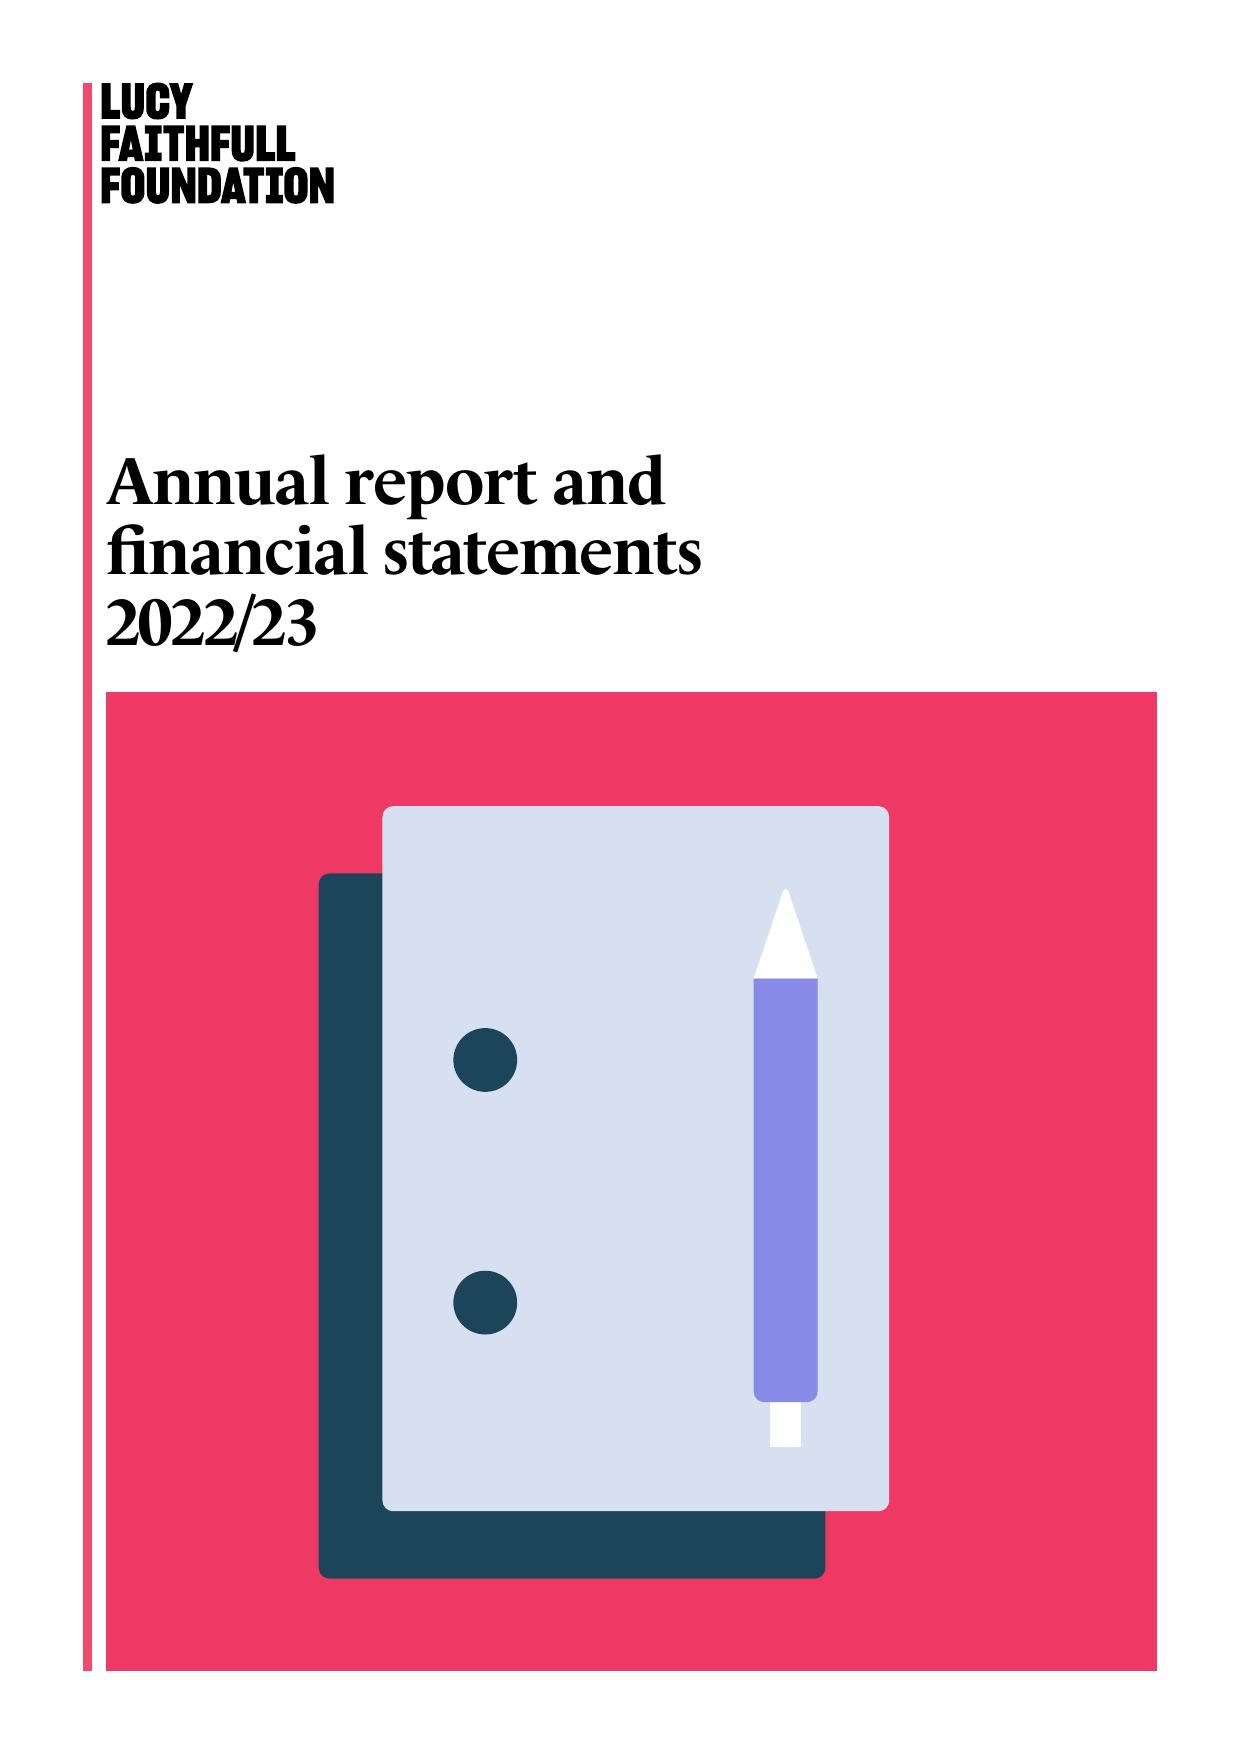 LUCYFAITHFULL.ORG.UK 2023 Annual Report